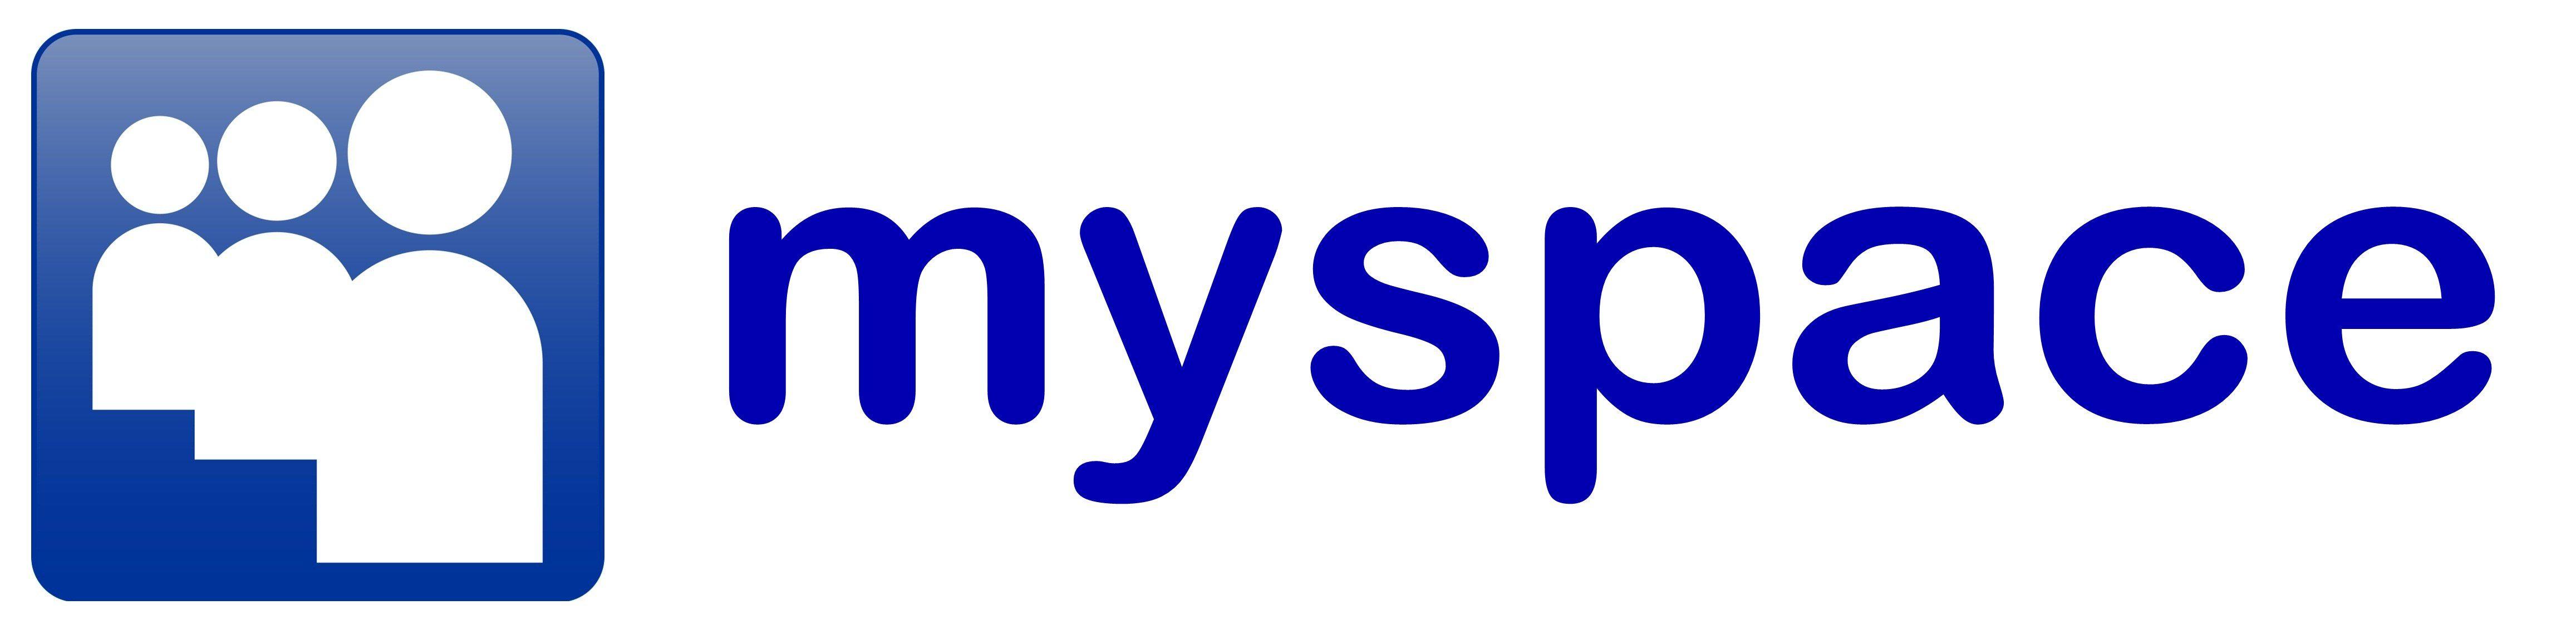 Myspace Logo - Free Myspace Icon 384215 | Download Myspace Icon - 384215